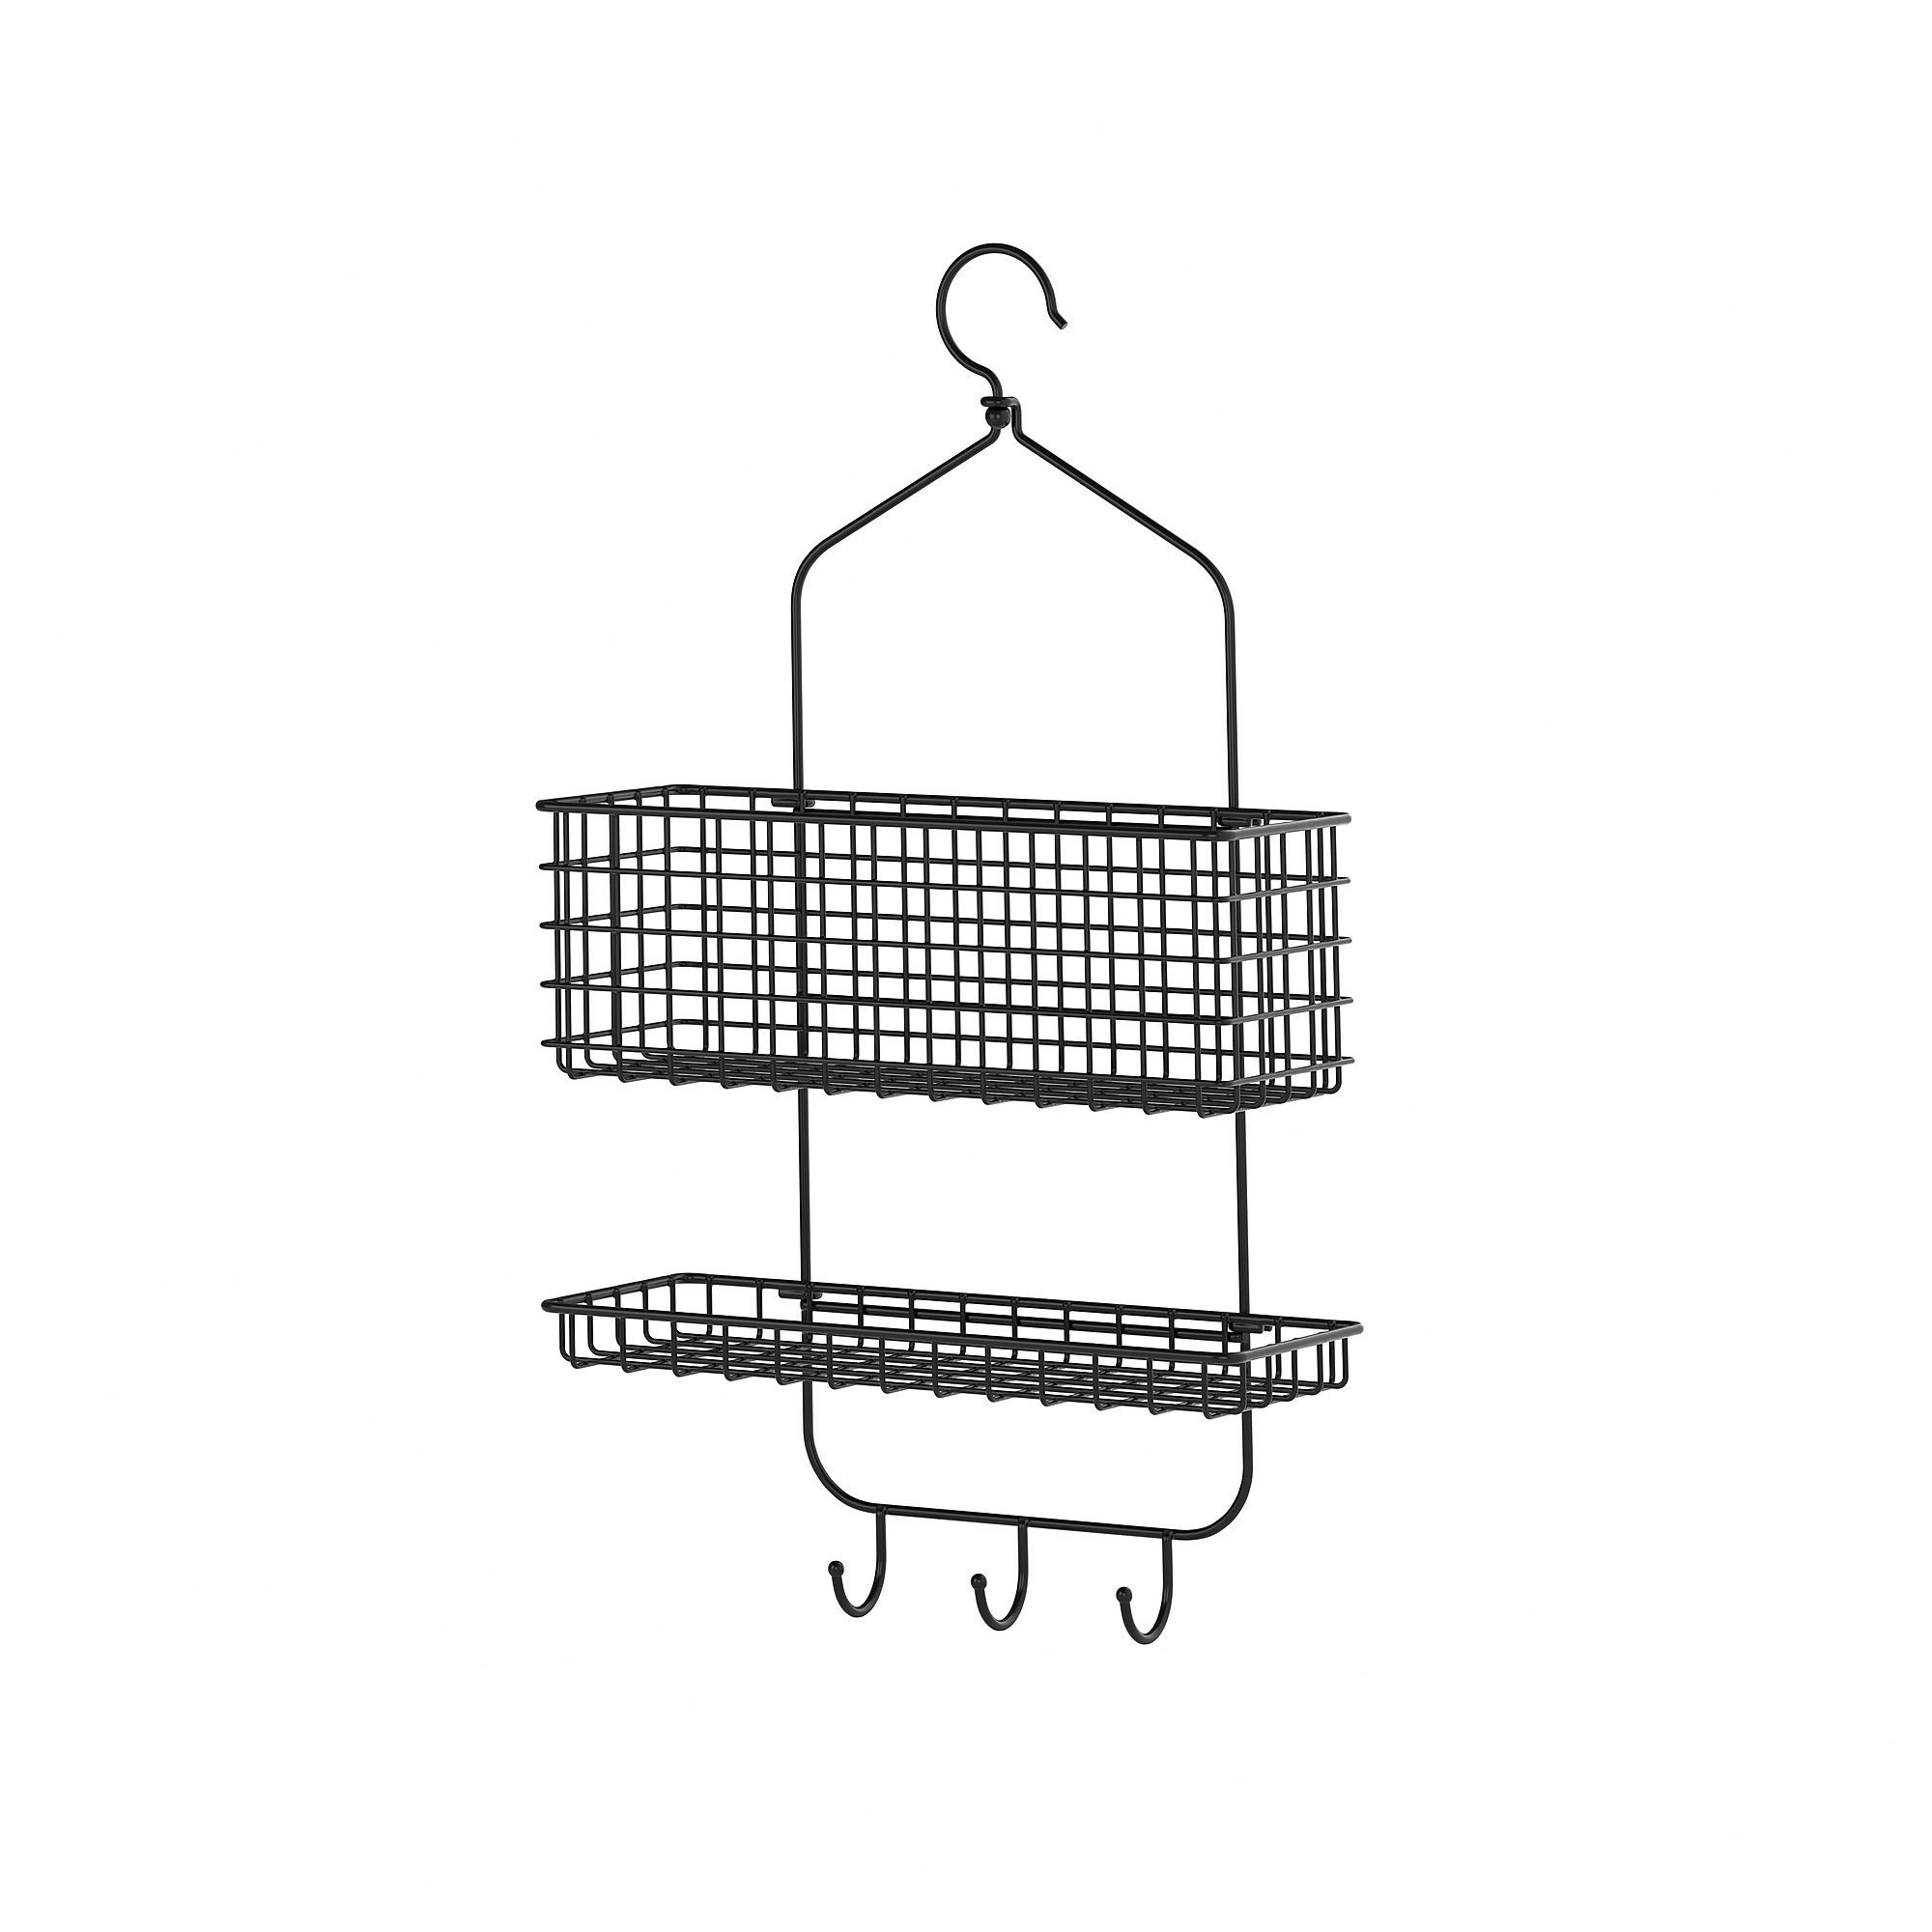 BLECKSJÖN shower hanger, two tiers